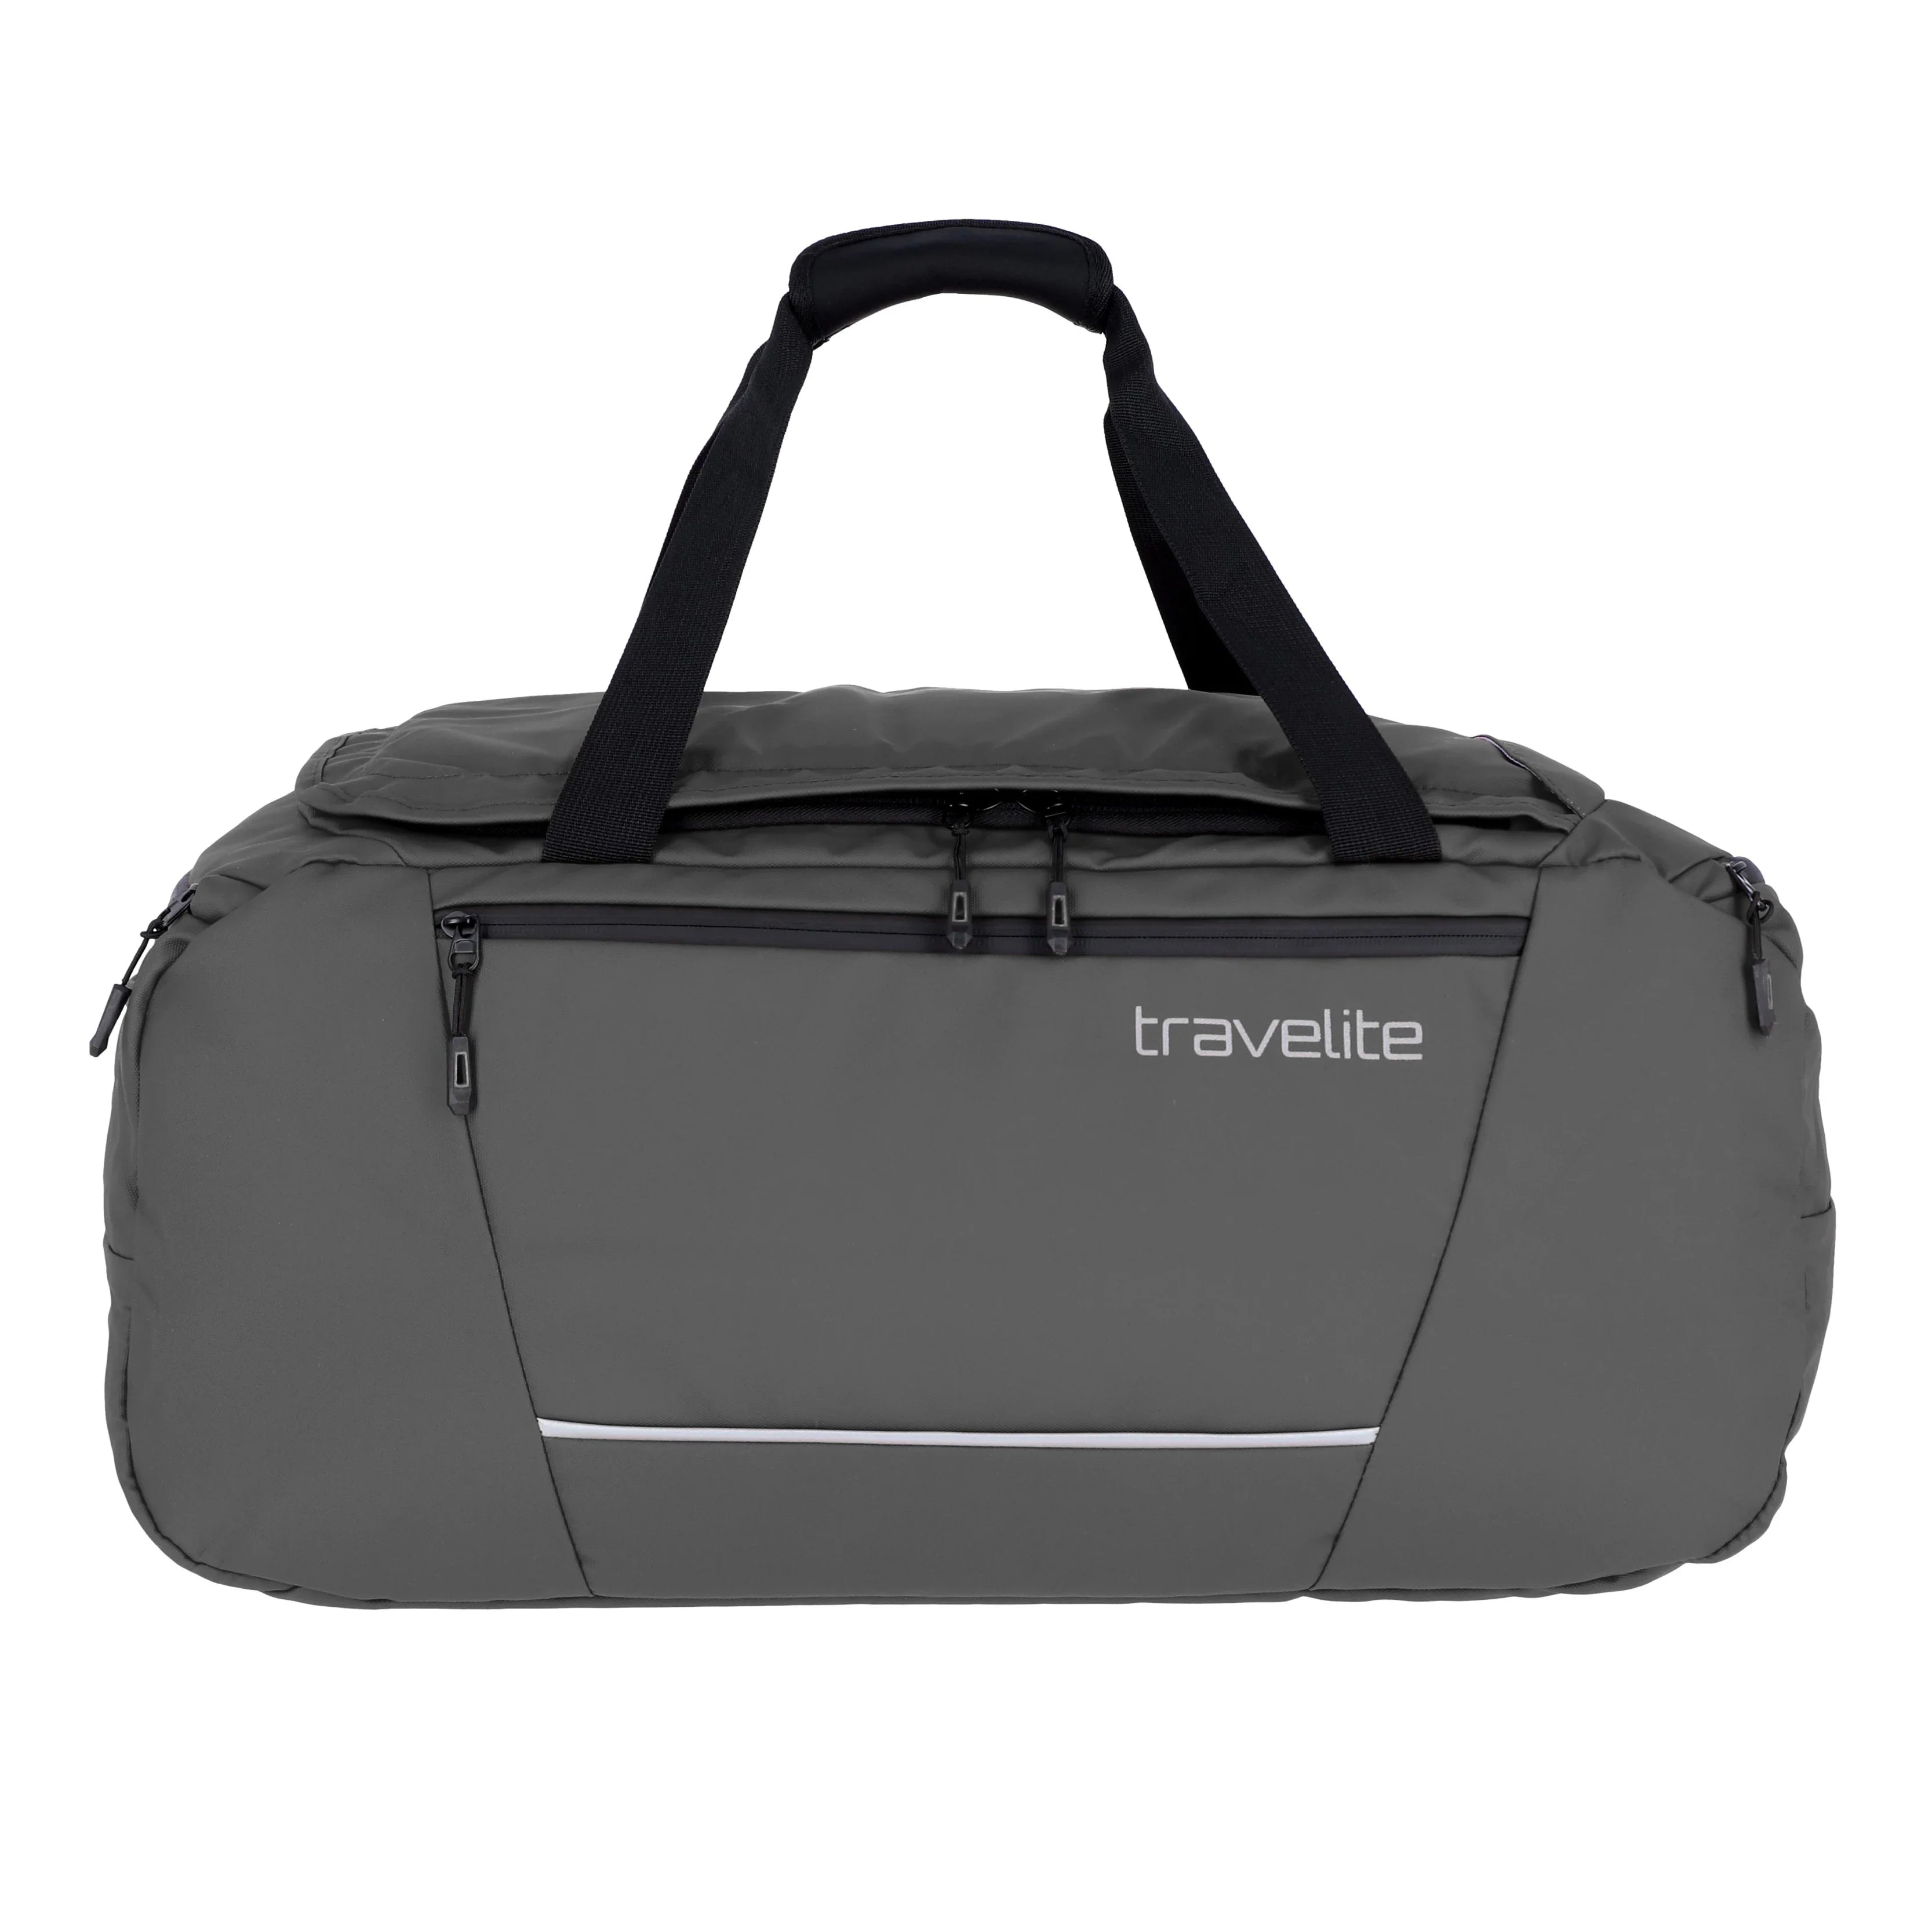 Travelite Basics sports/travel bag 60 cm - anthracite